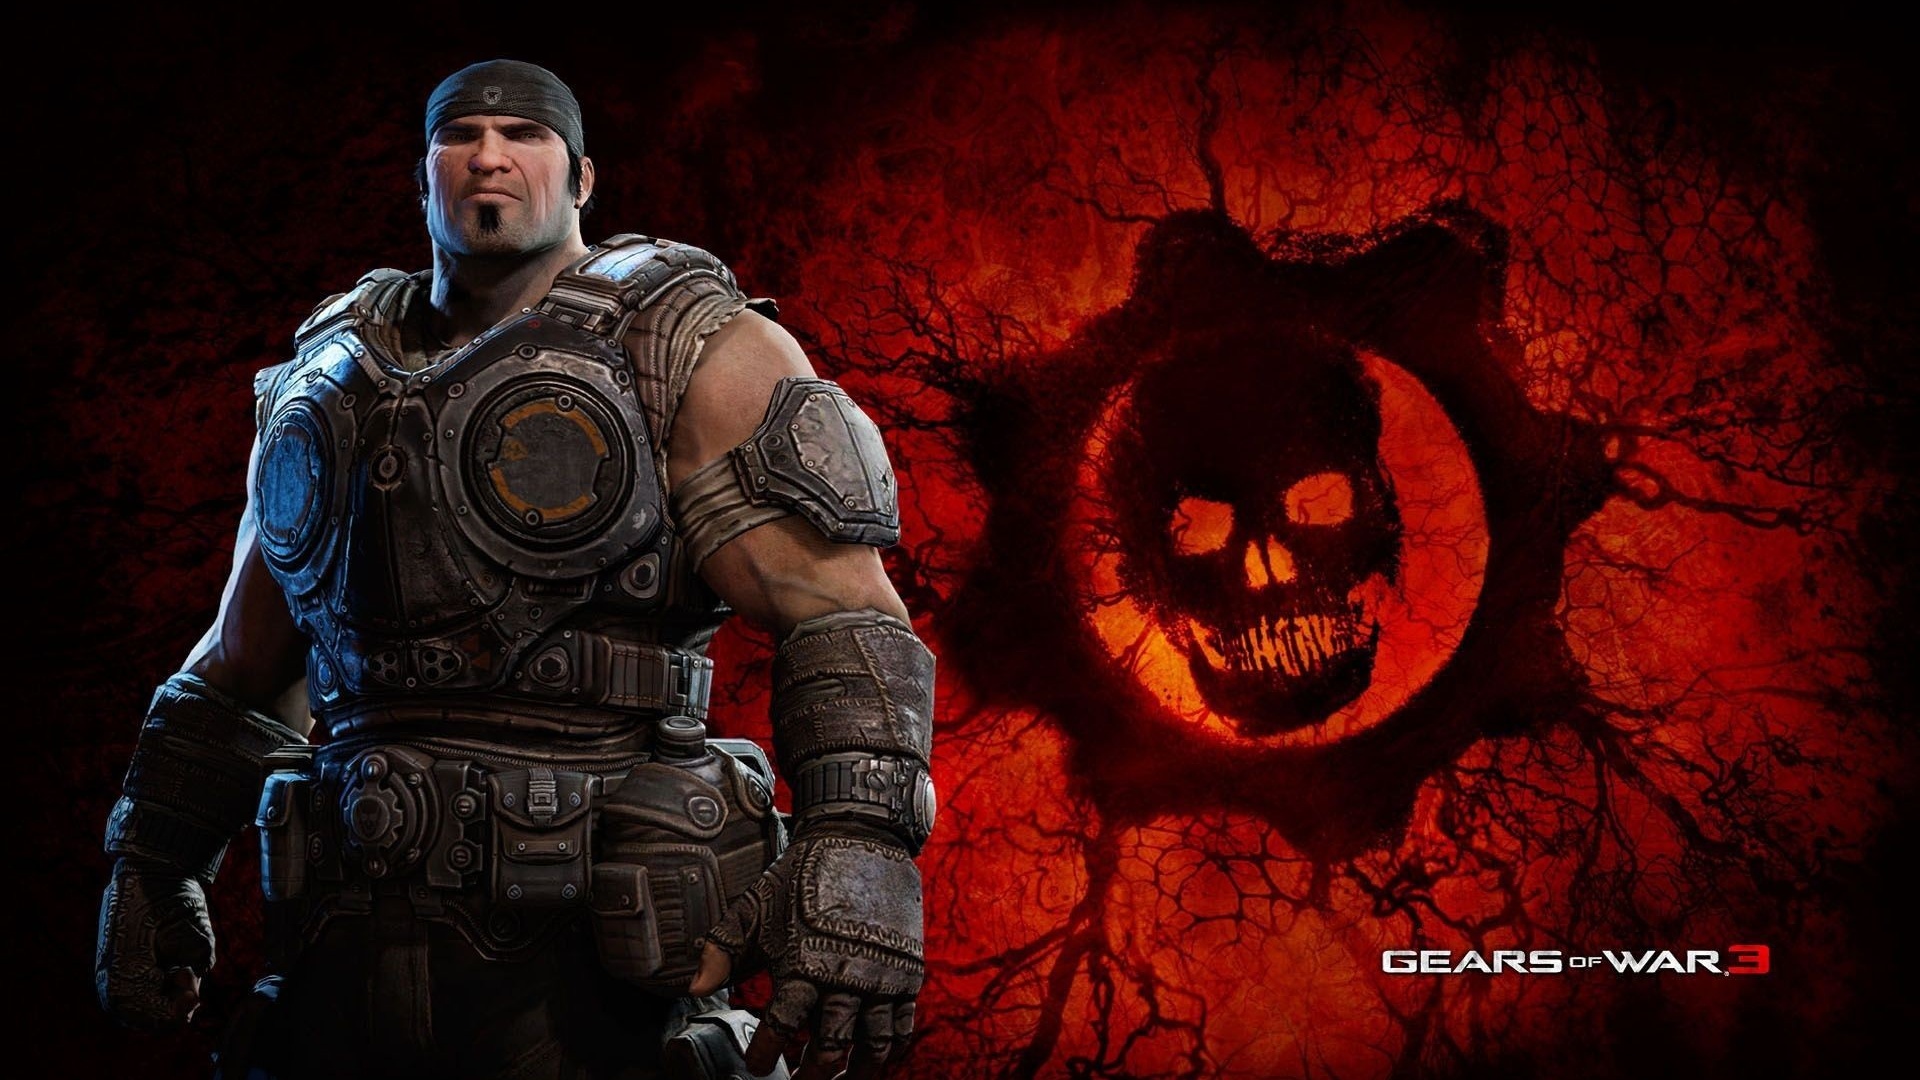 Marcus In Gears Of War 3